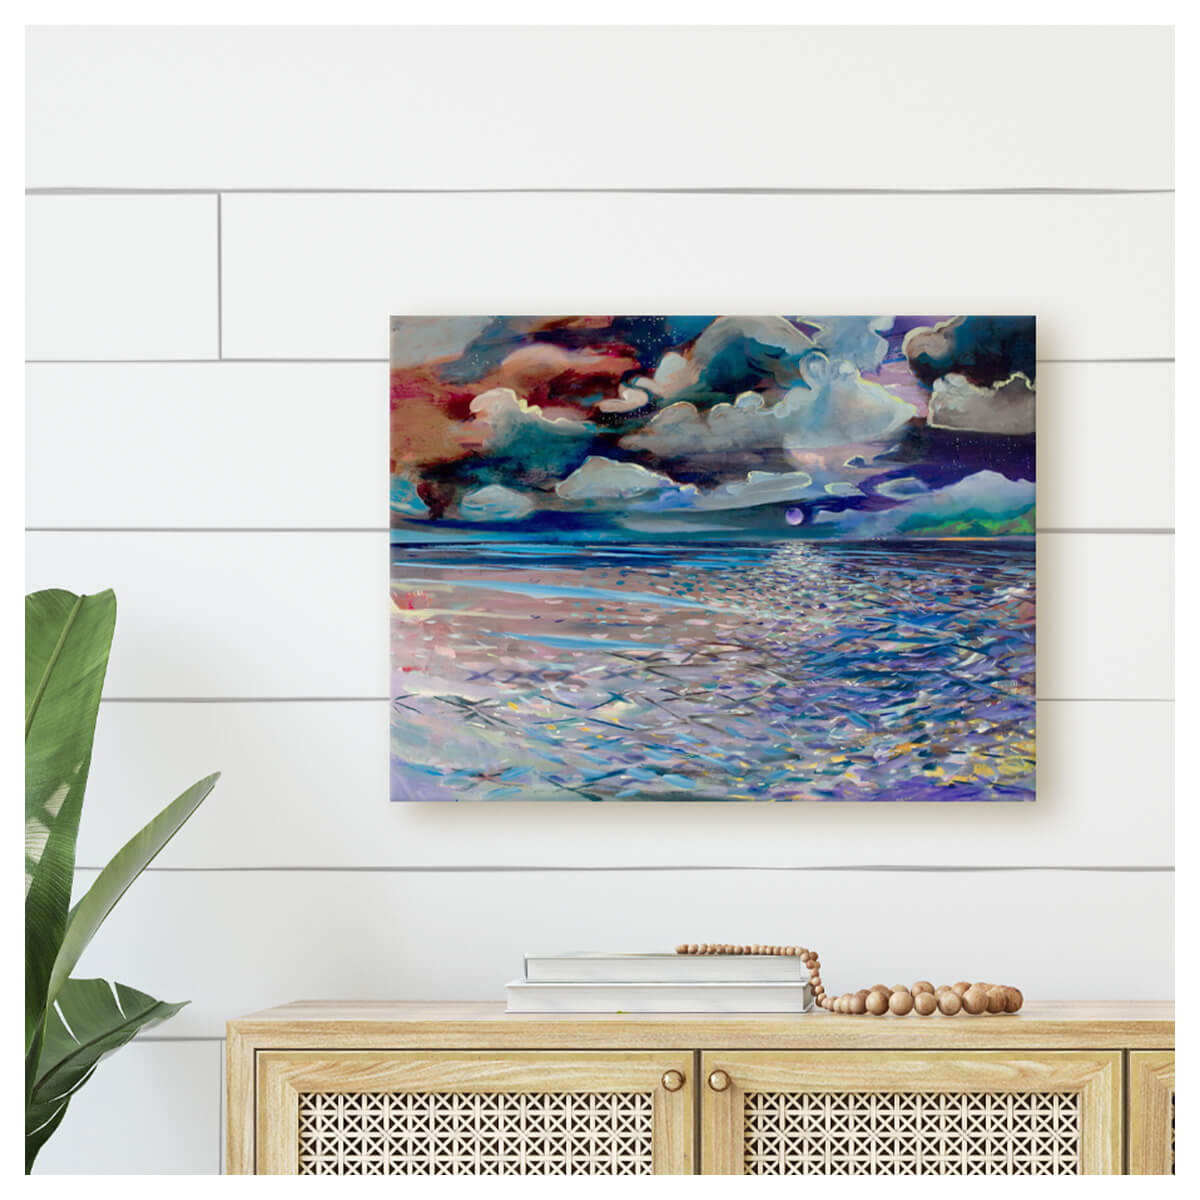 Canvas art print of twilight seascape painting by Hawaii artist Saumolia Puapuaga